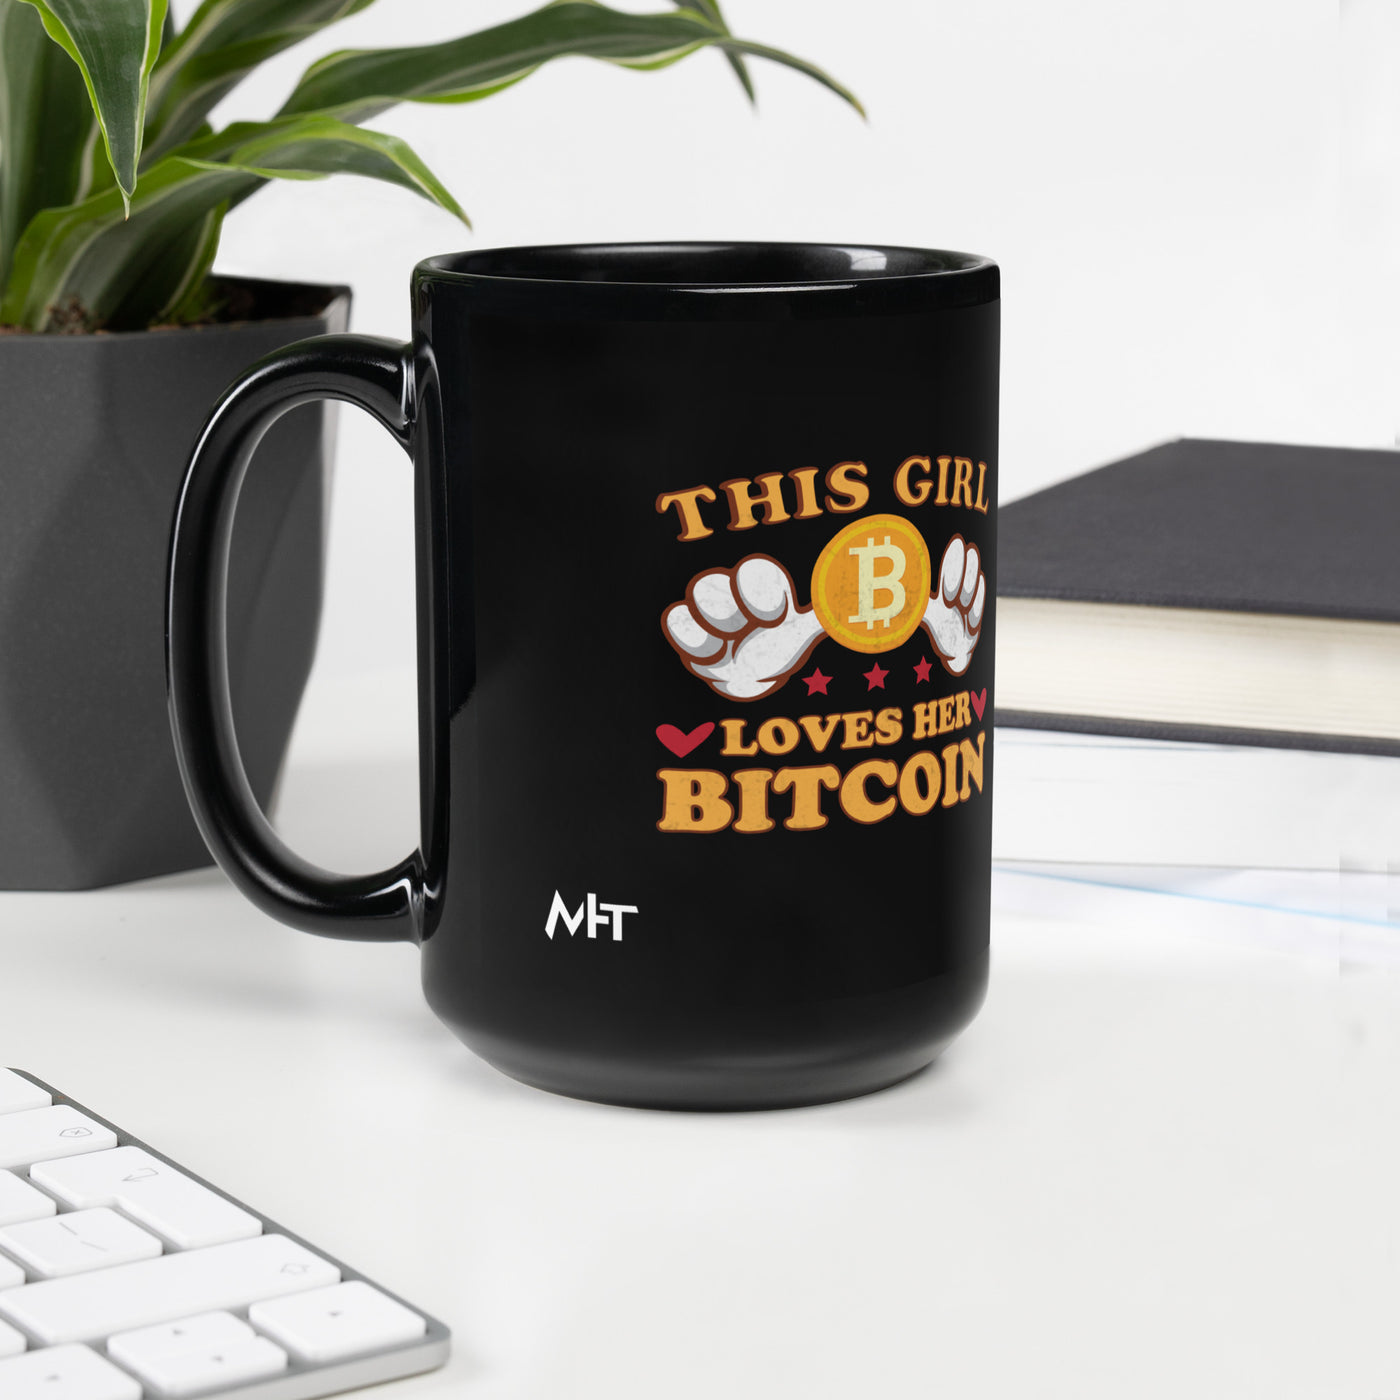 This girl Loves her Bitcoin - Black Glossy Mug